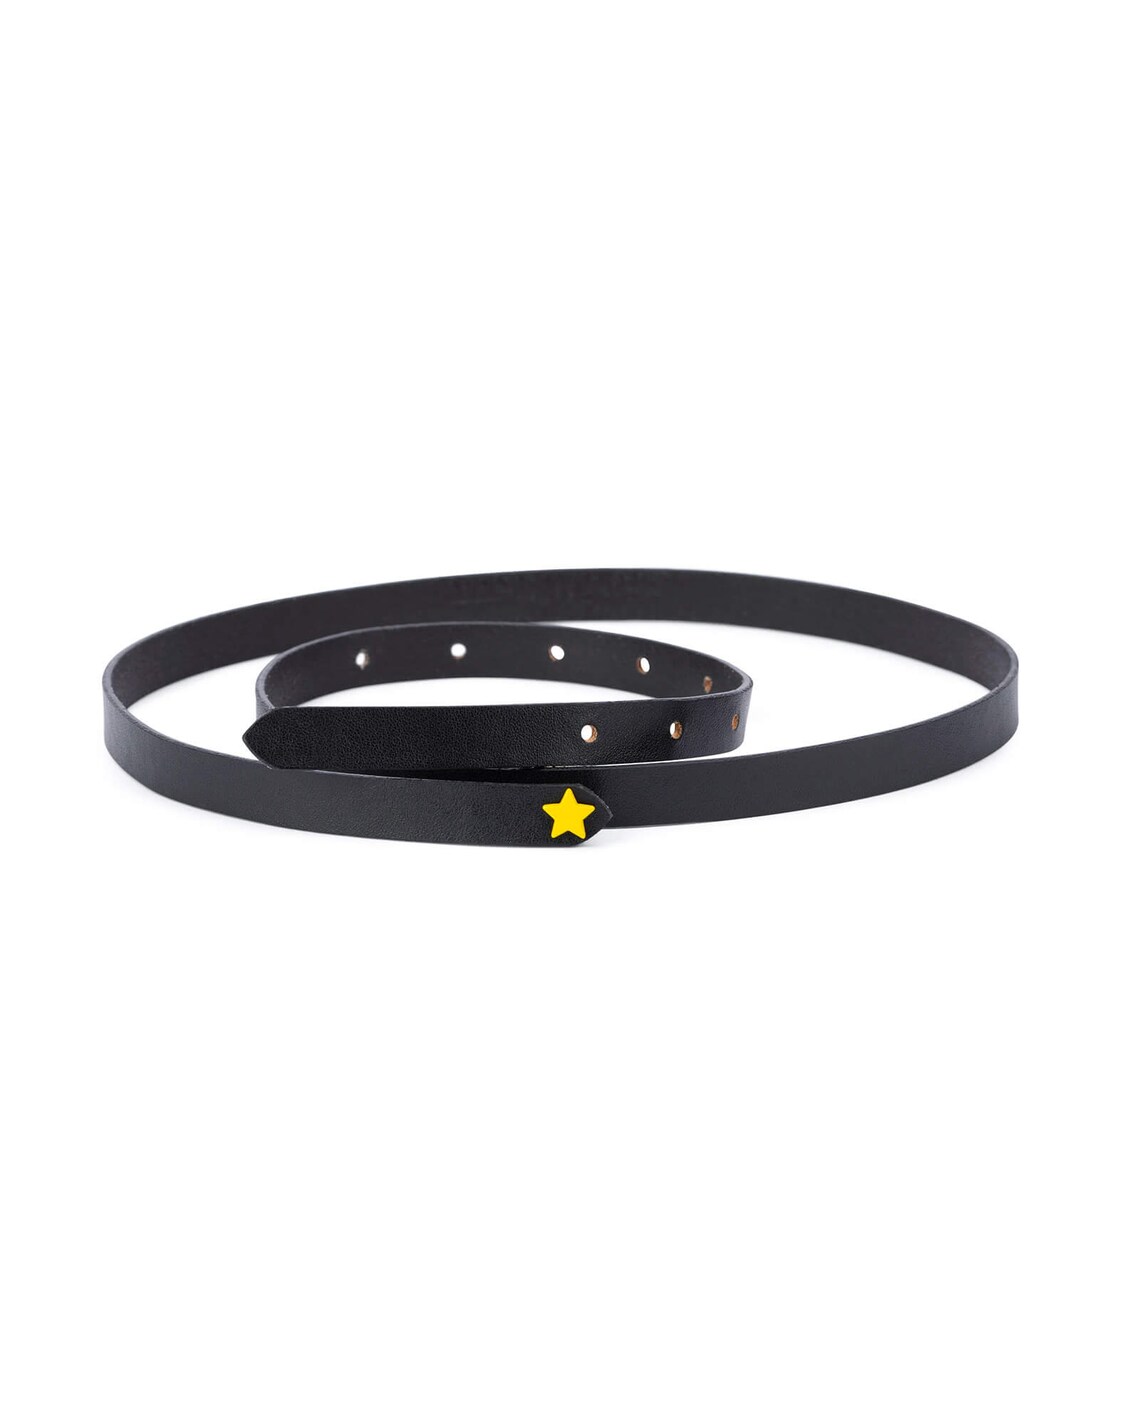 Buy Womens Thin Dress Belt | Black With Yellow Star | LeatherBeltsOnline